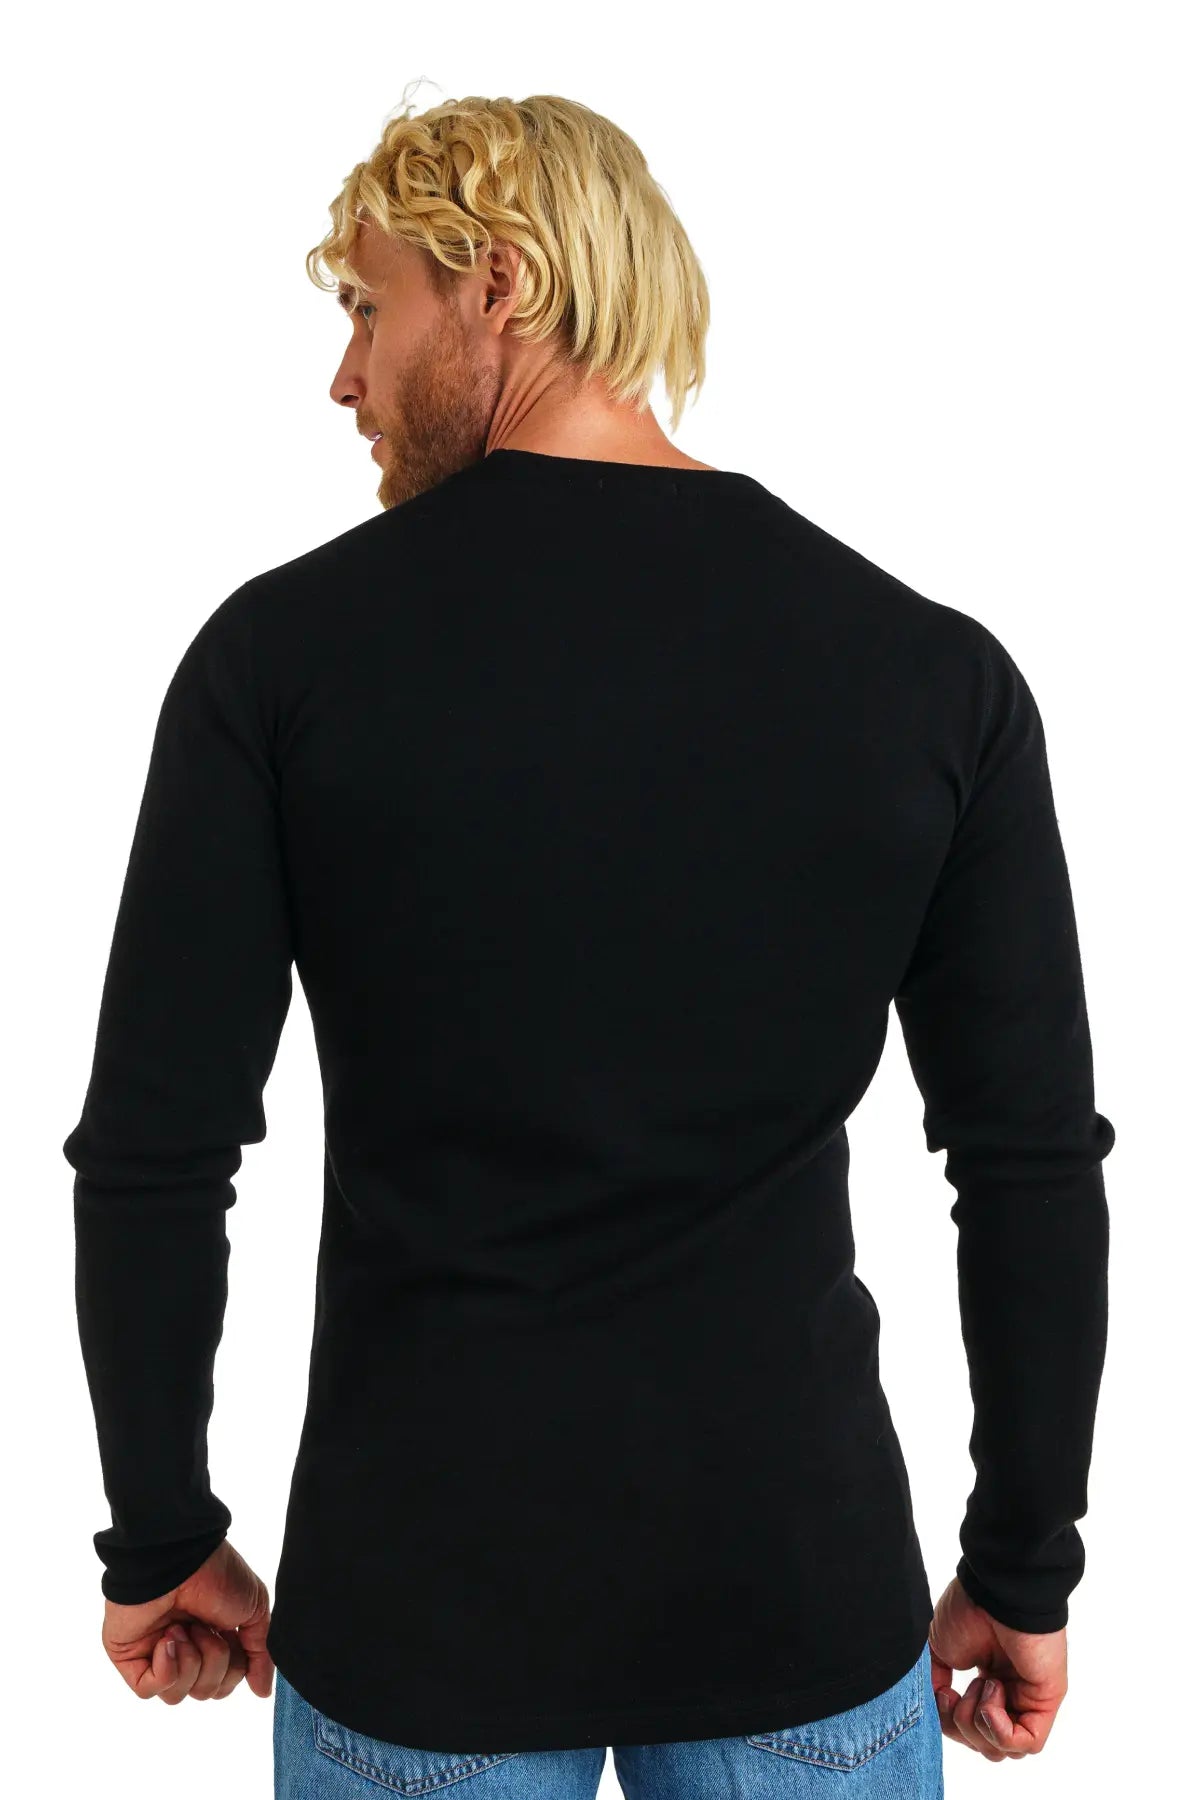 Merino Wool Long Sleeve Base Layer, Heavyweight, Thermal Underwear